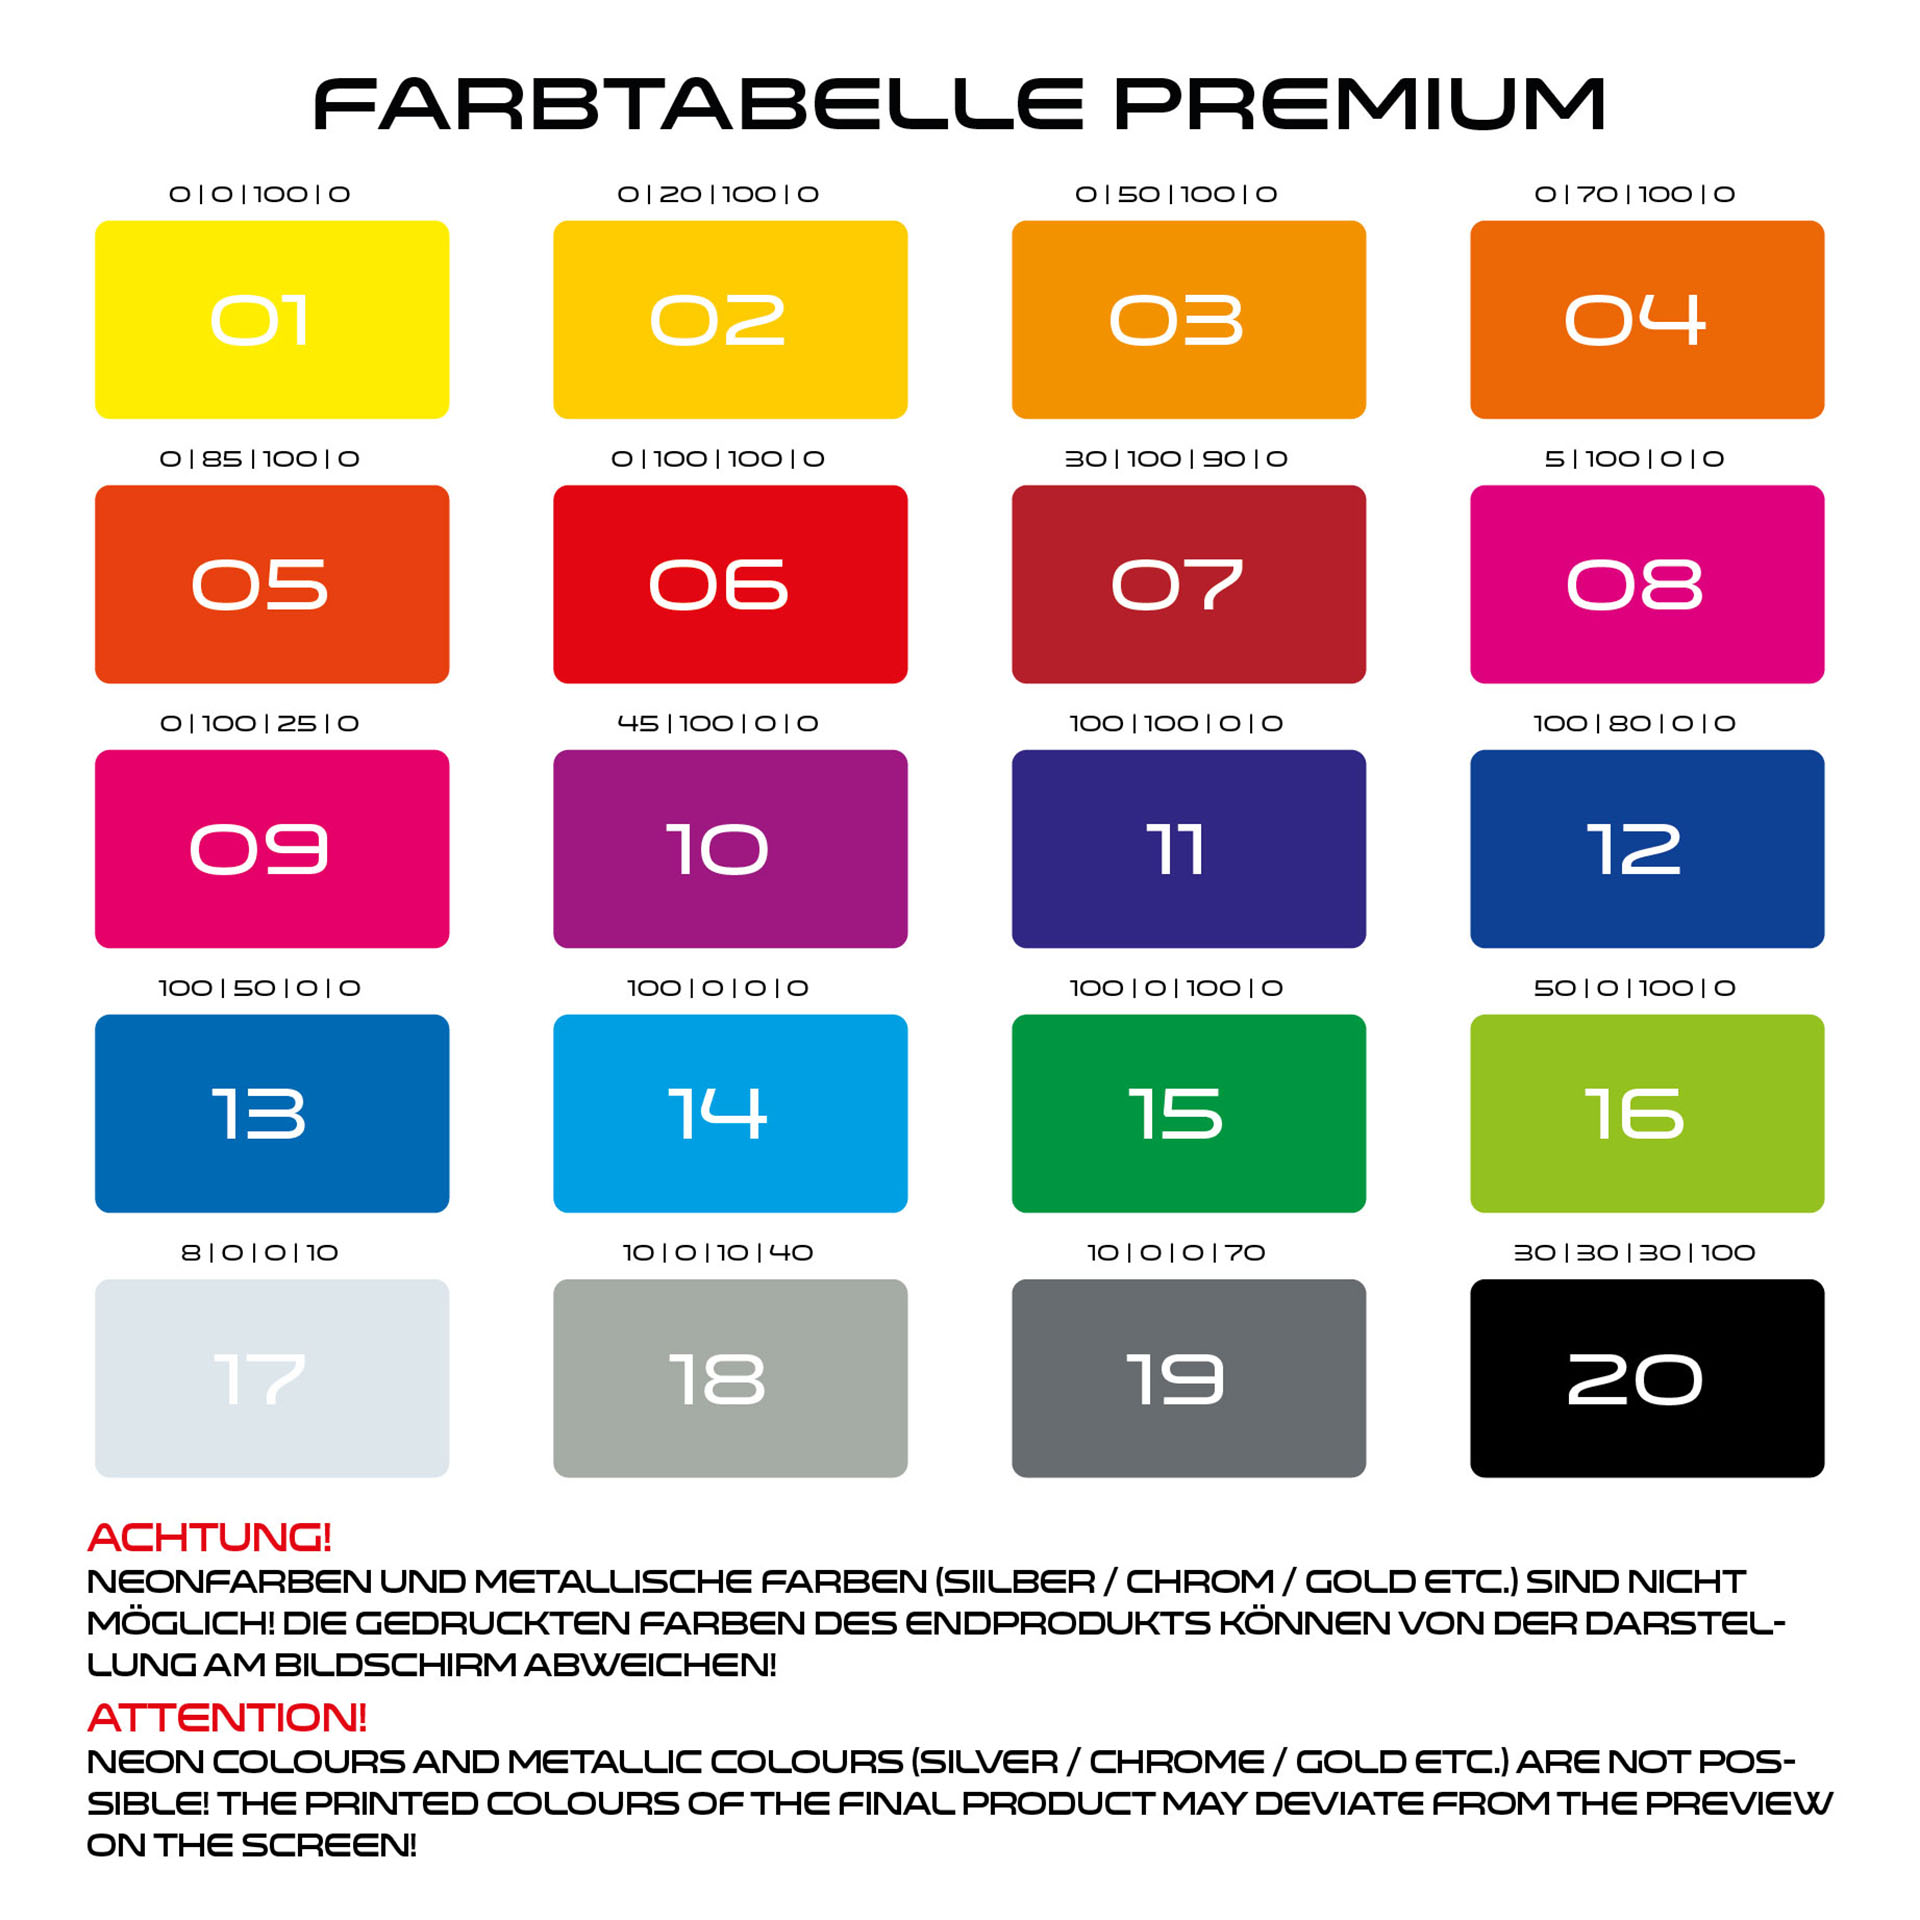 Zebramuster Felgenaufkleber Premium B Farbtabelle Premium Wheelsticker